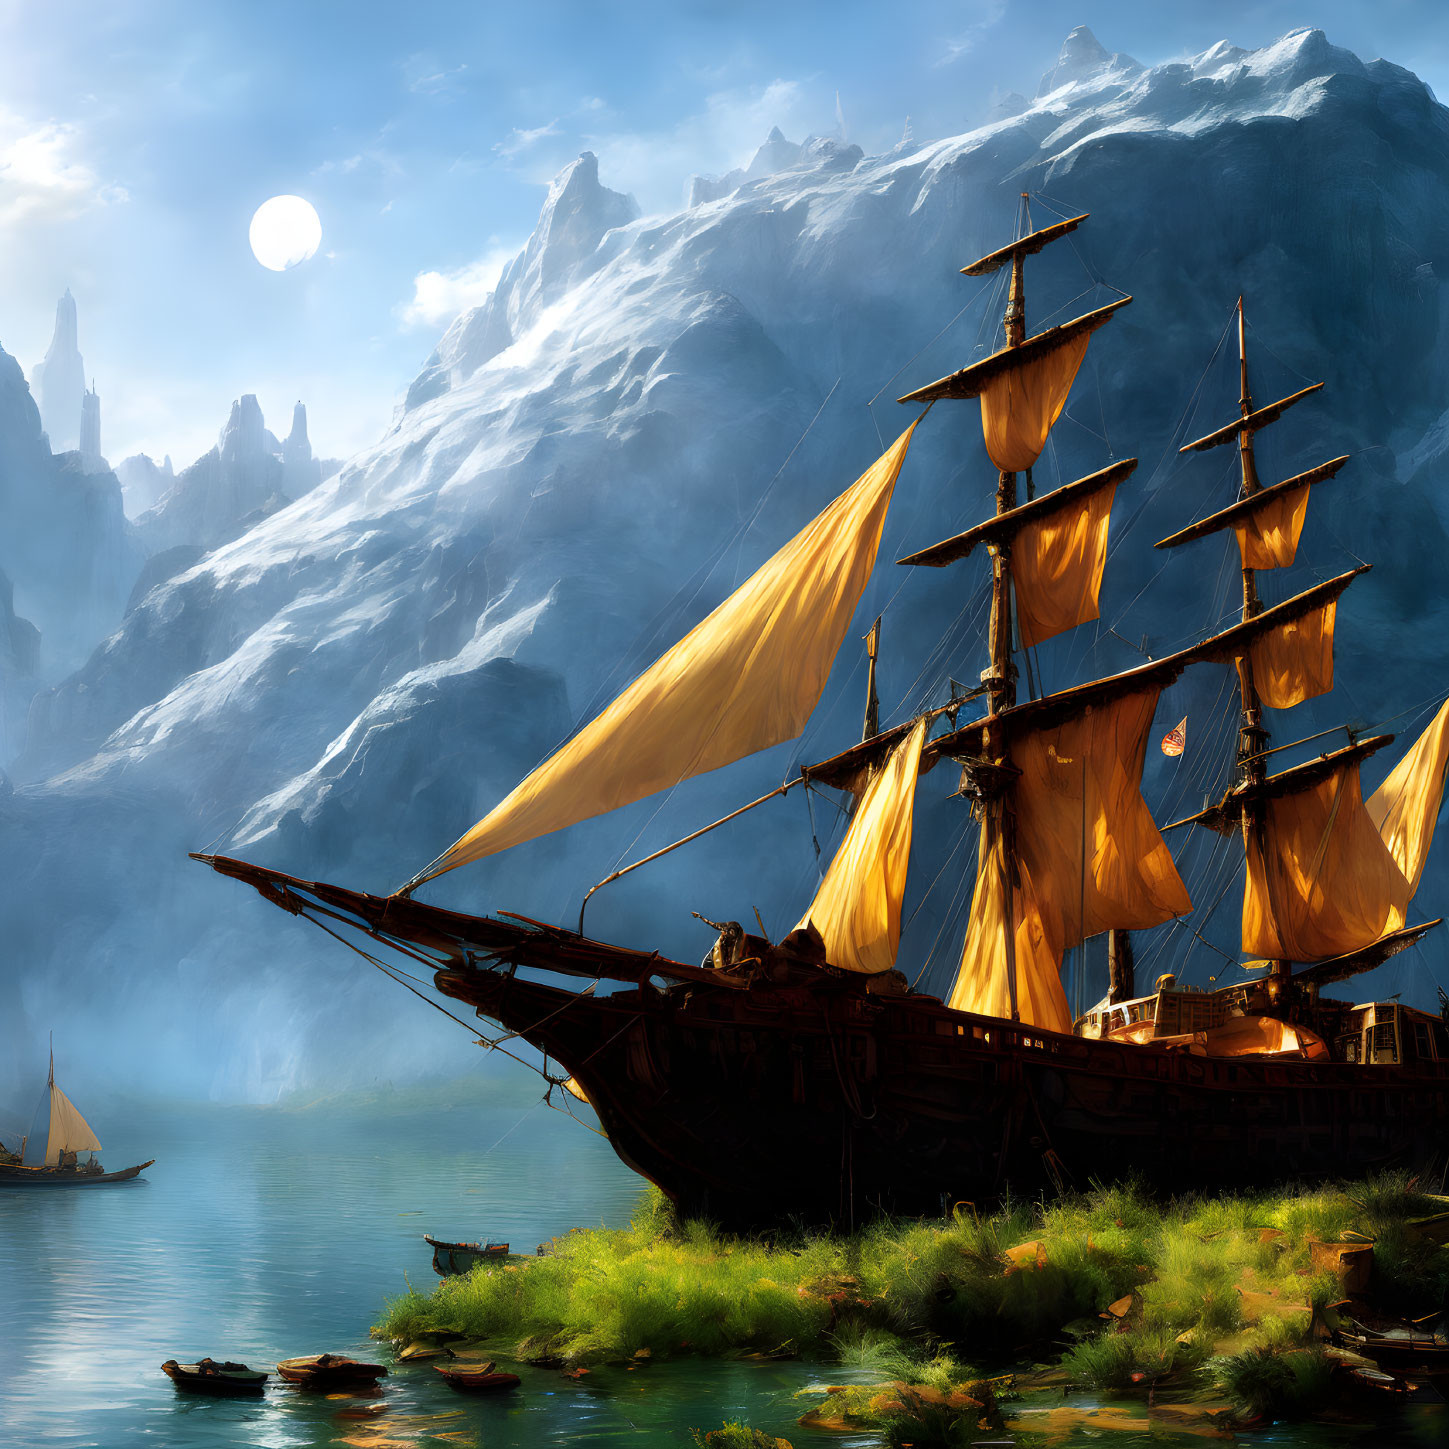 Golden-sailed galleon in misty mountain bay